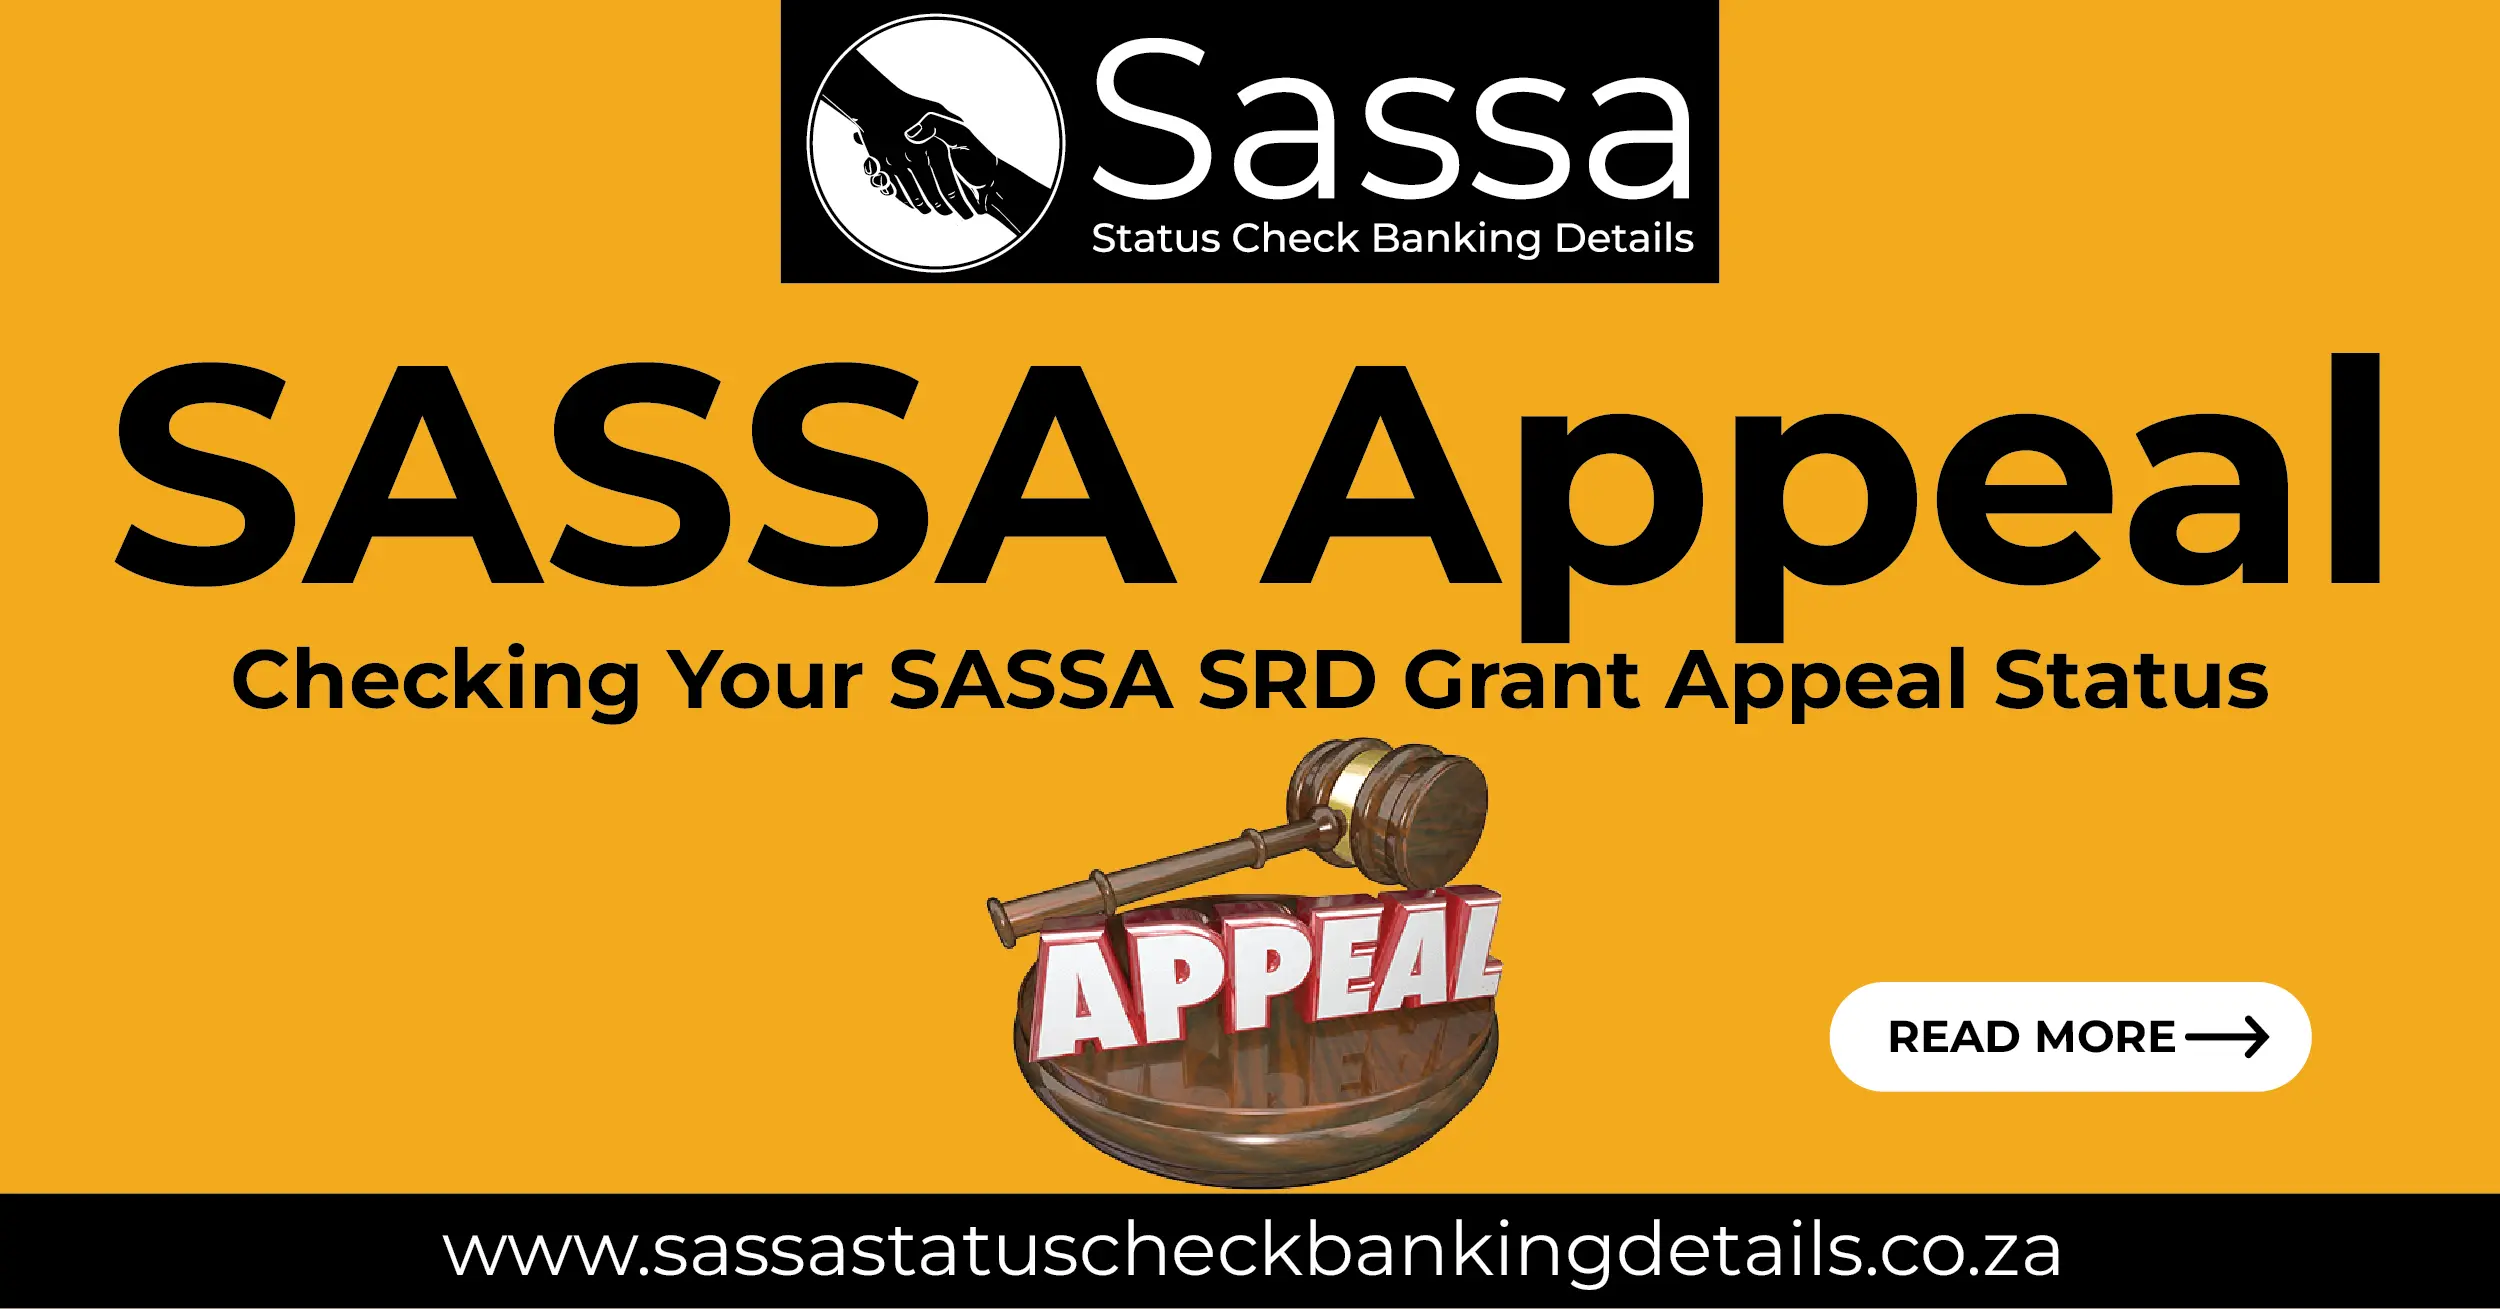 SASSA Appeal: Checking Your SASSA SRD Grant Appeal Status